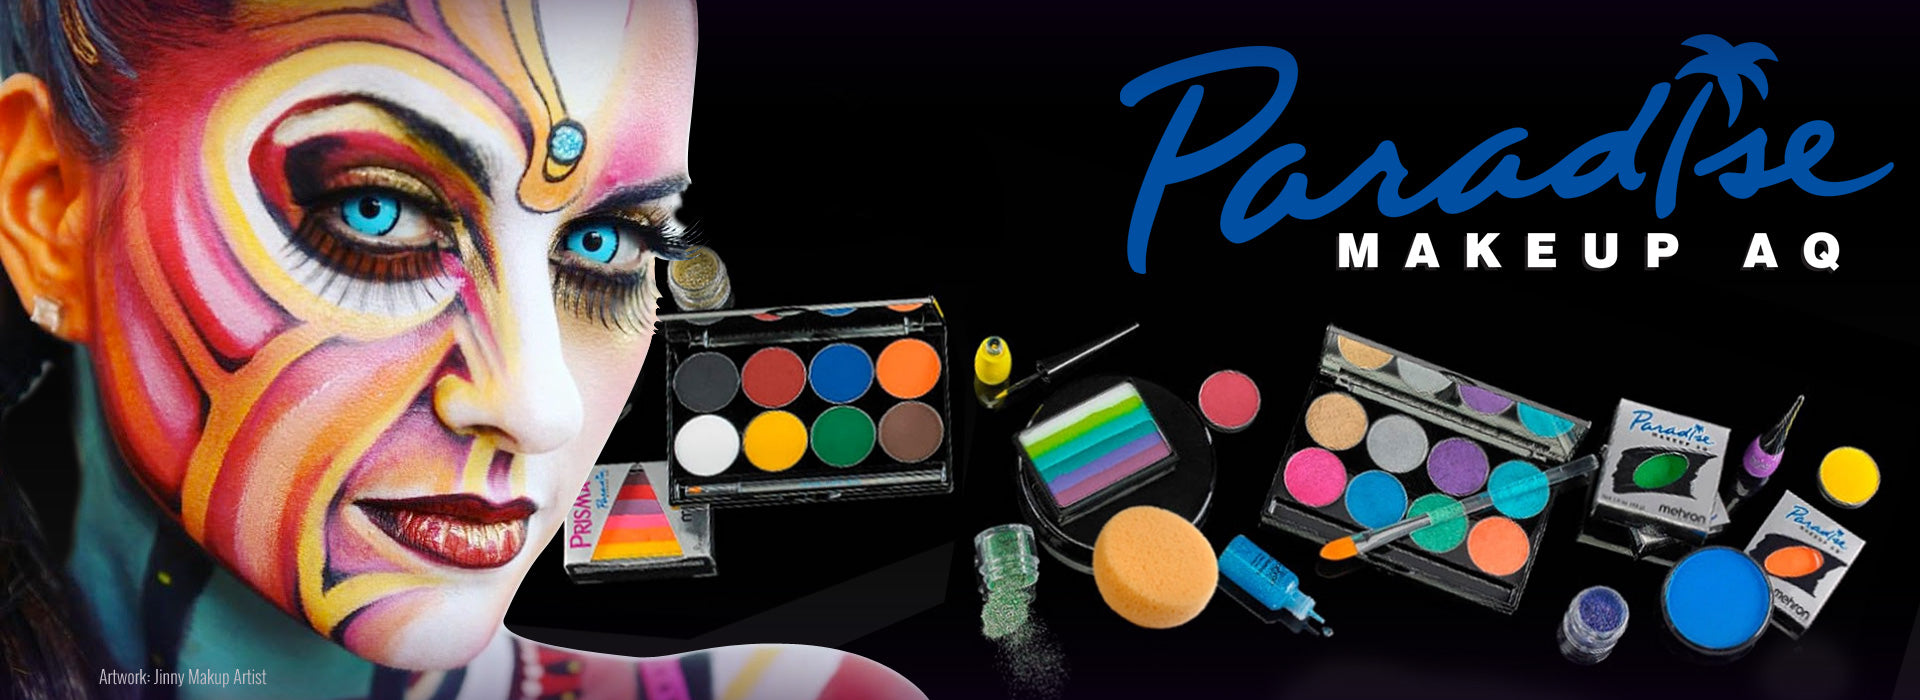 Paradise Makeup AQ Face Paint